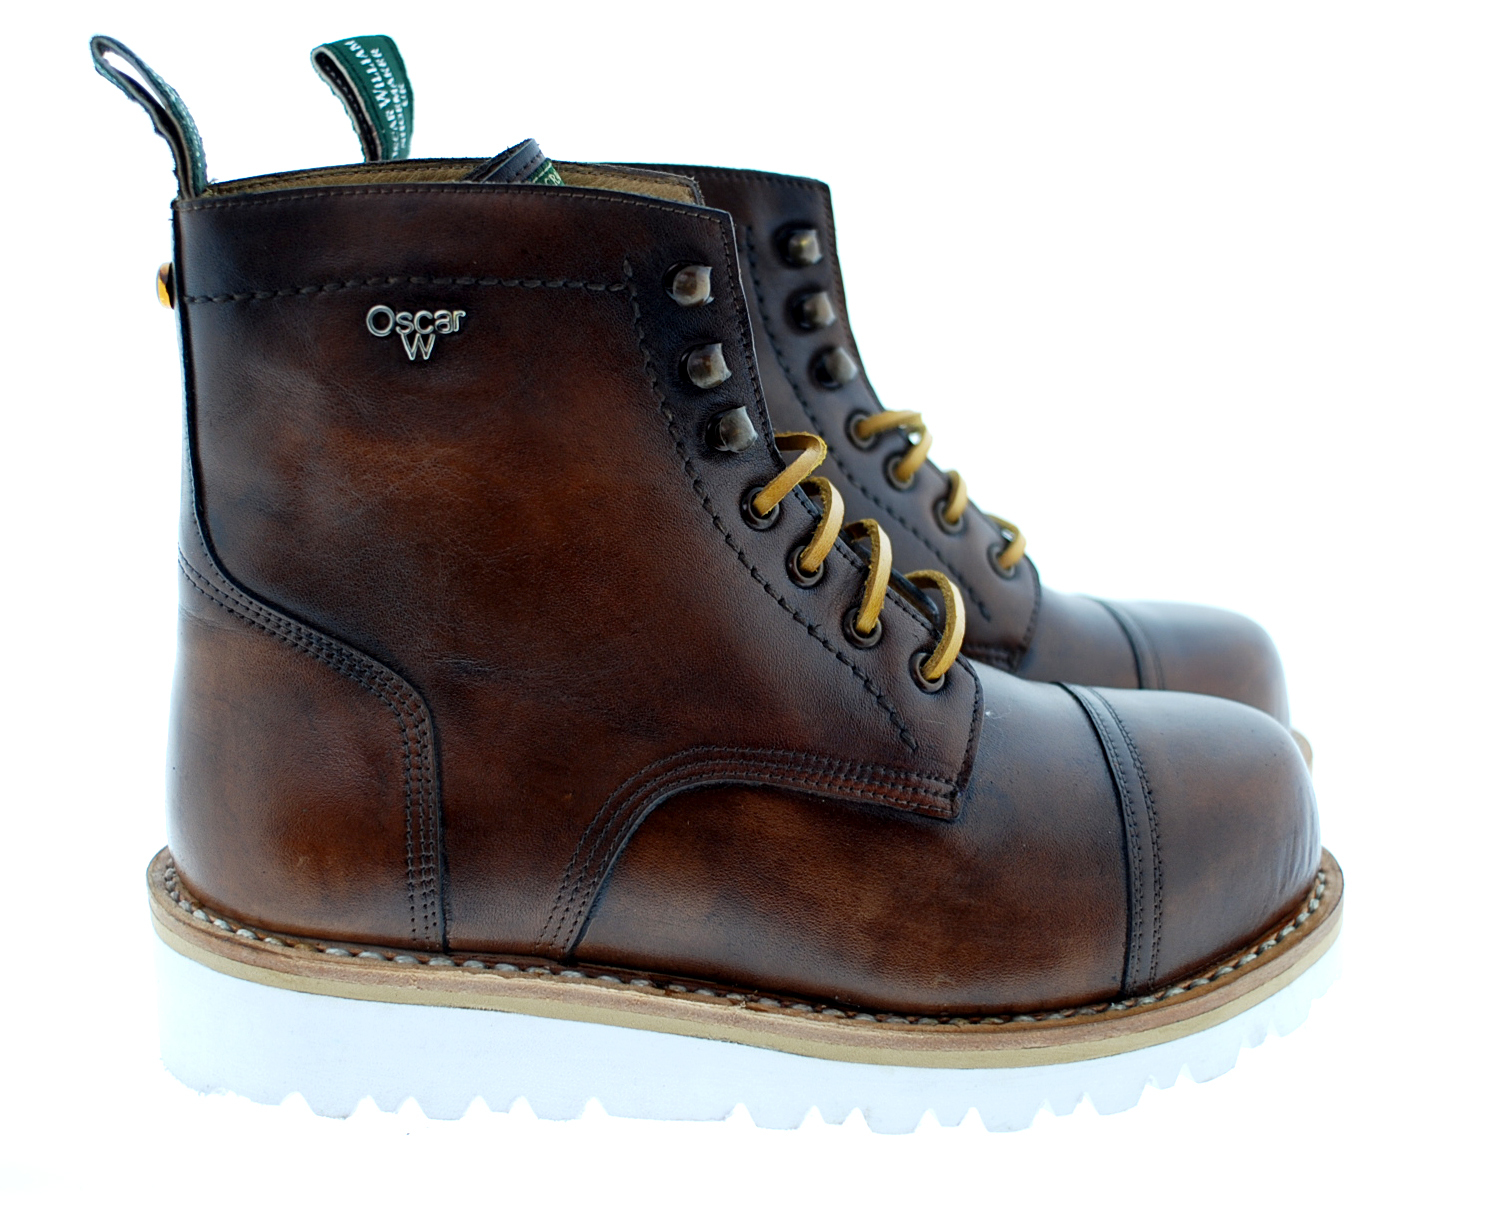 New Moc Toe Handmade Boots (Camden Town) ID 7092